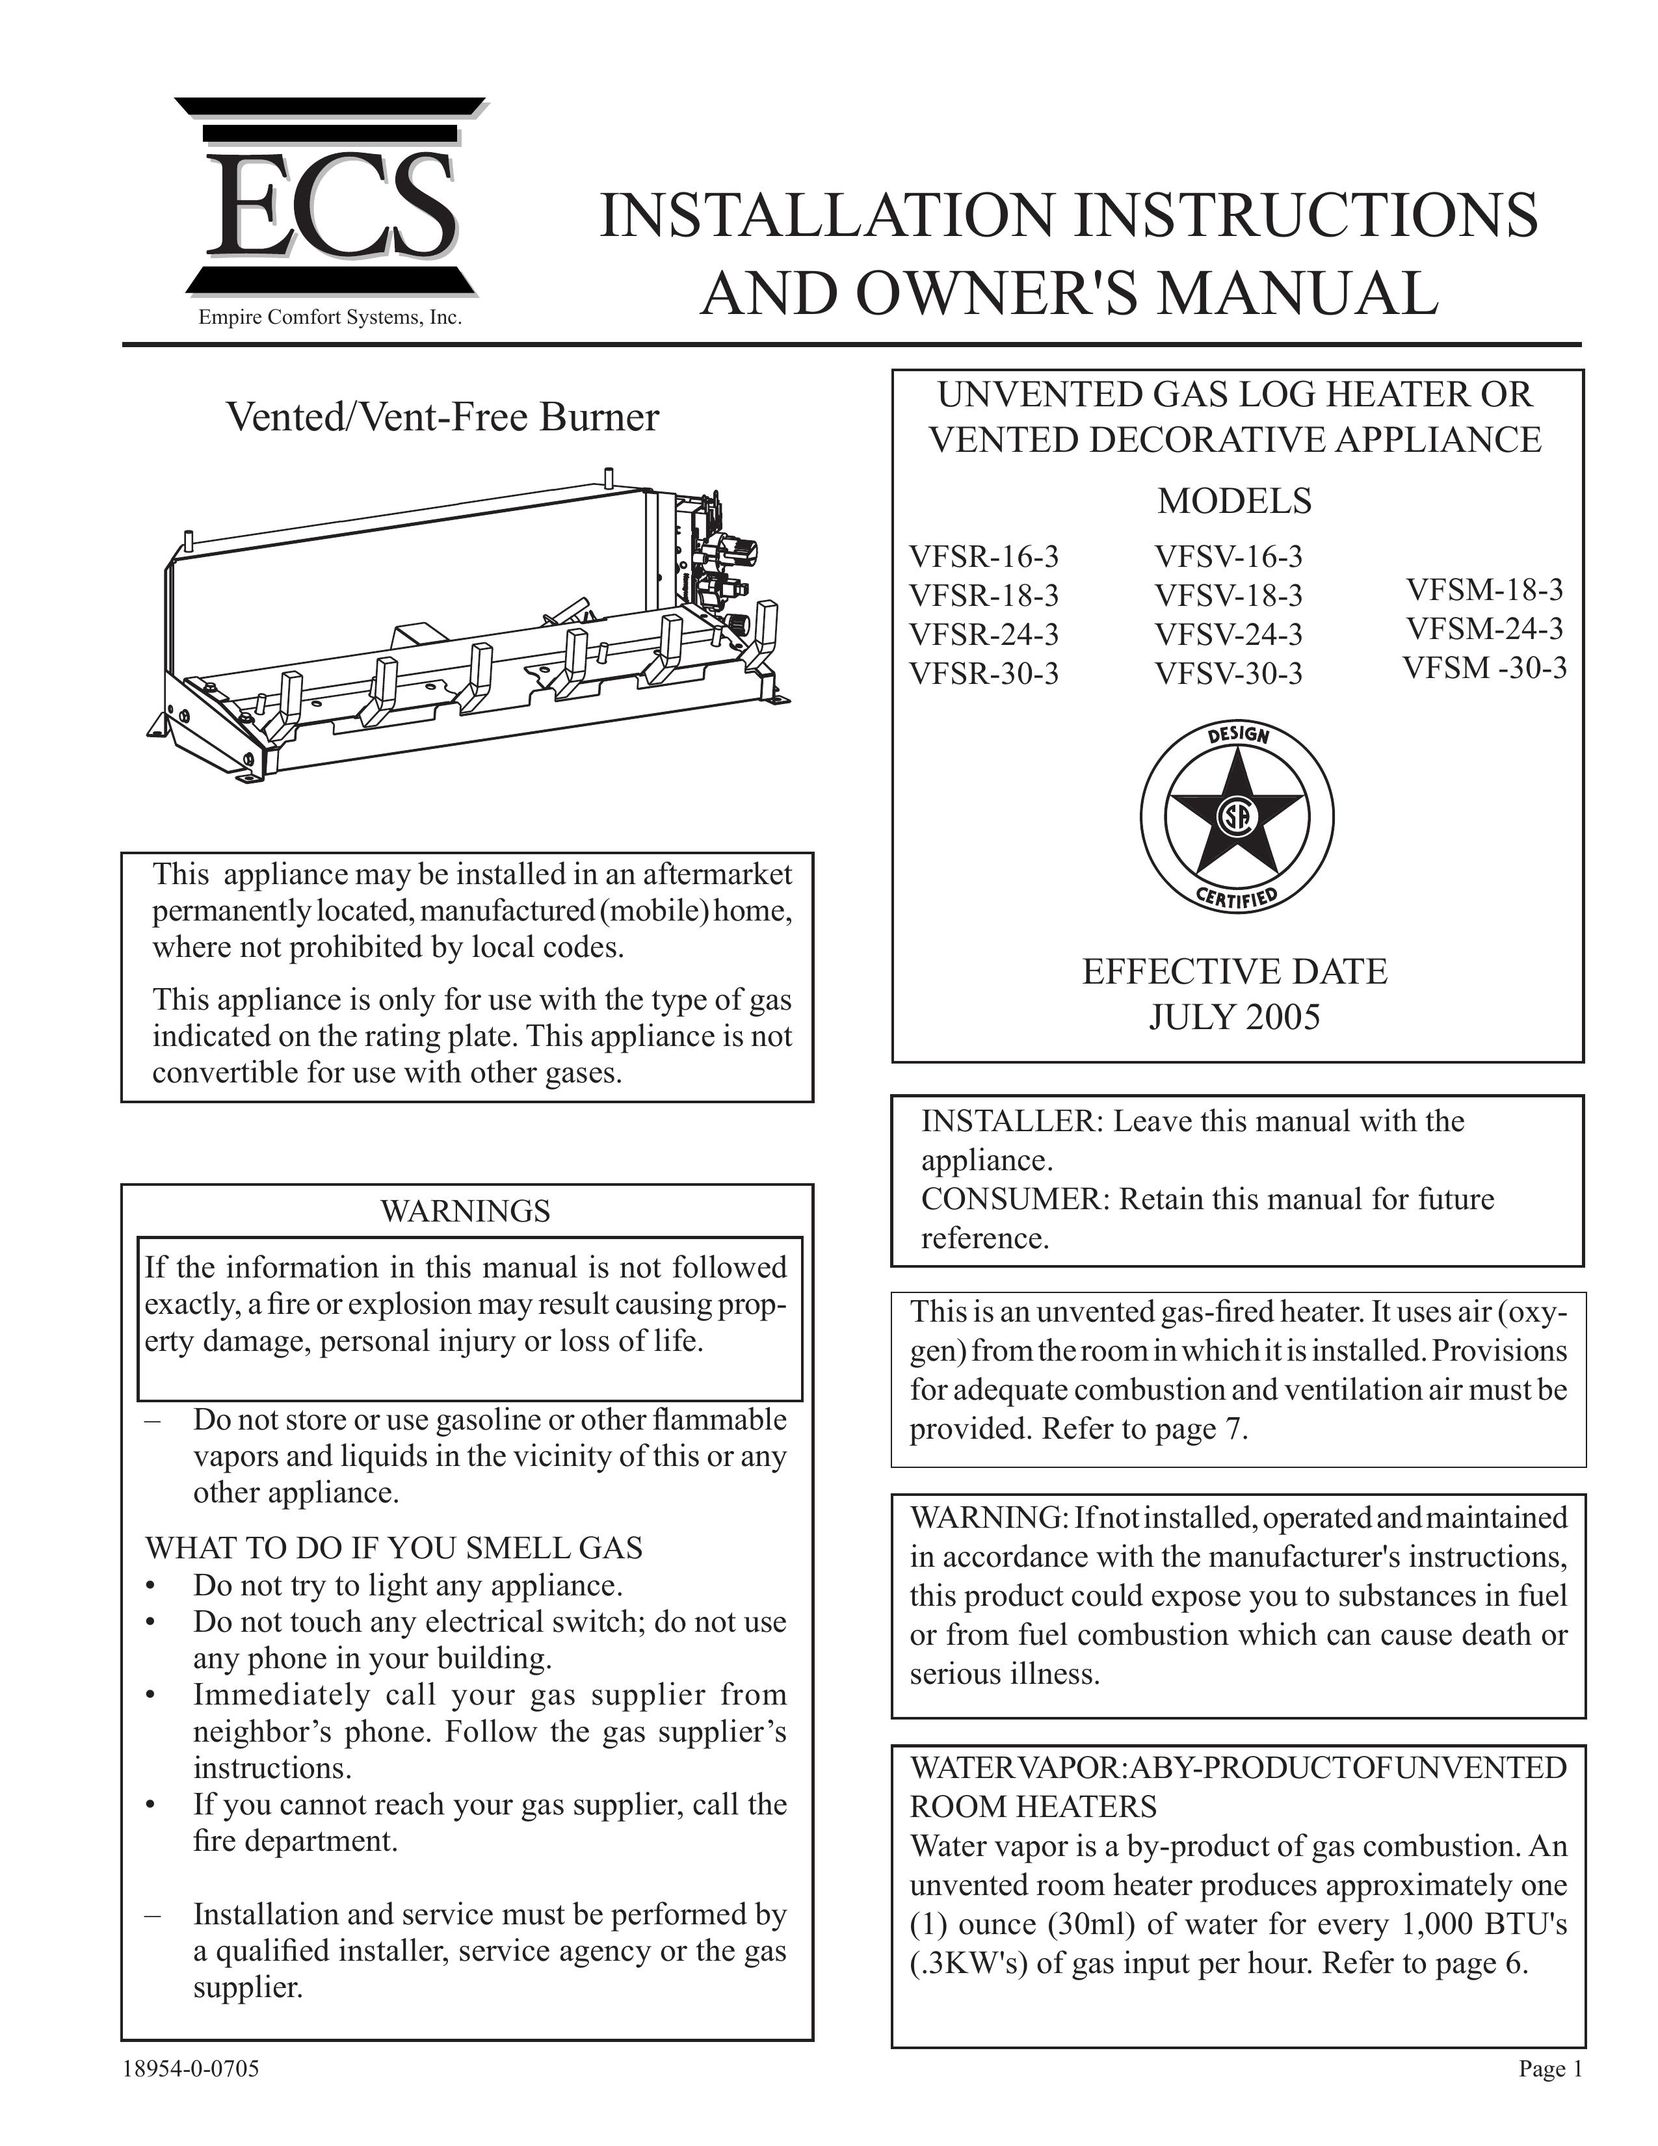 Empire Comfort Systems VFSV-18-3 Electric Heater User Manual